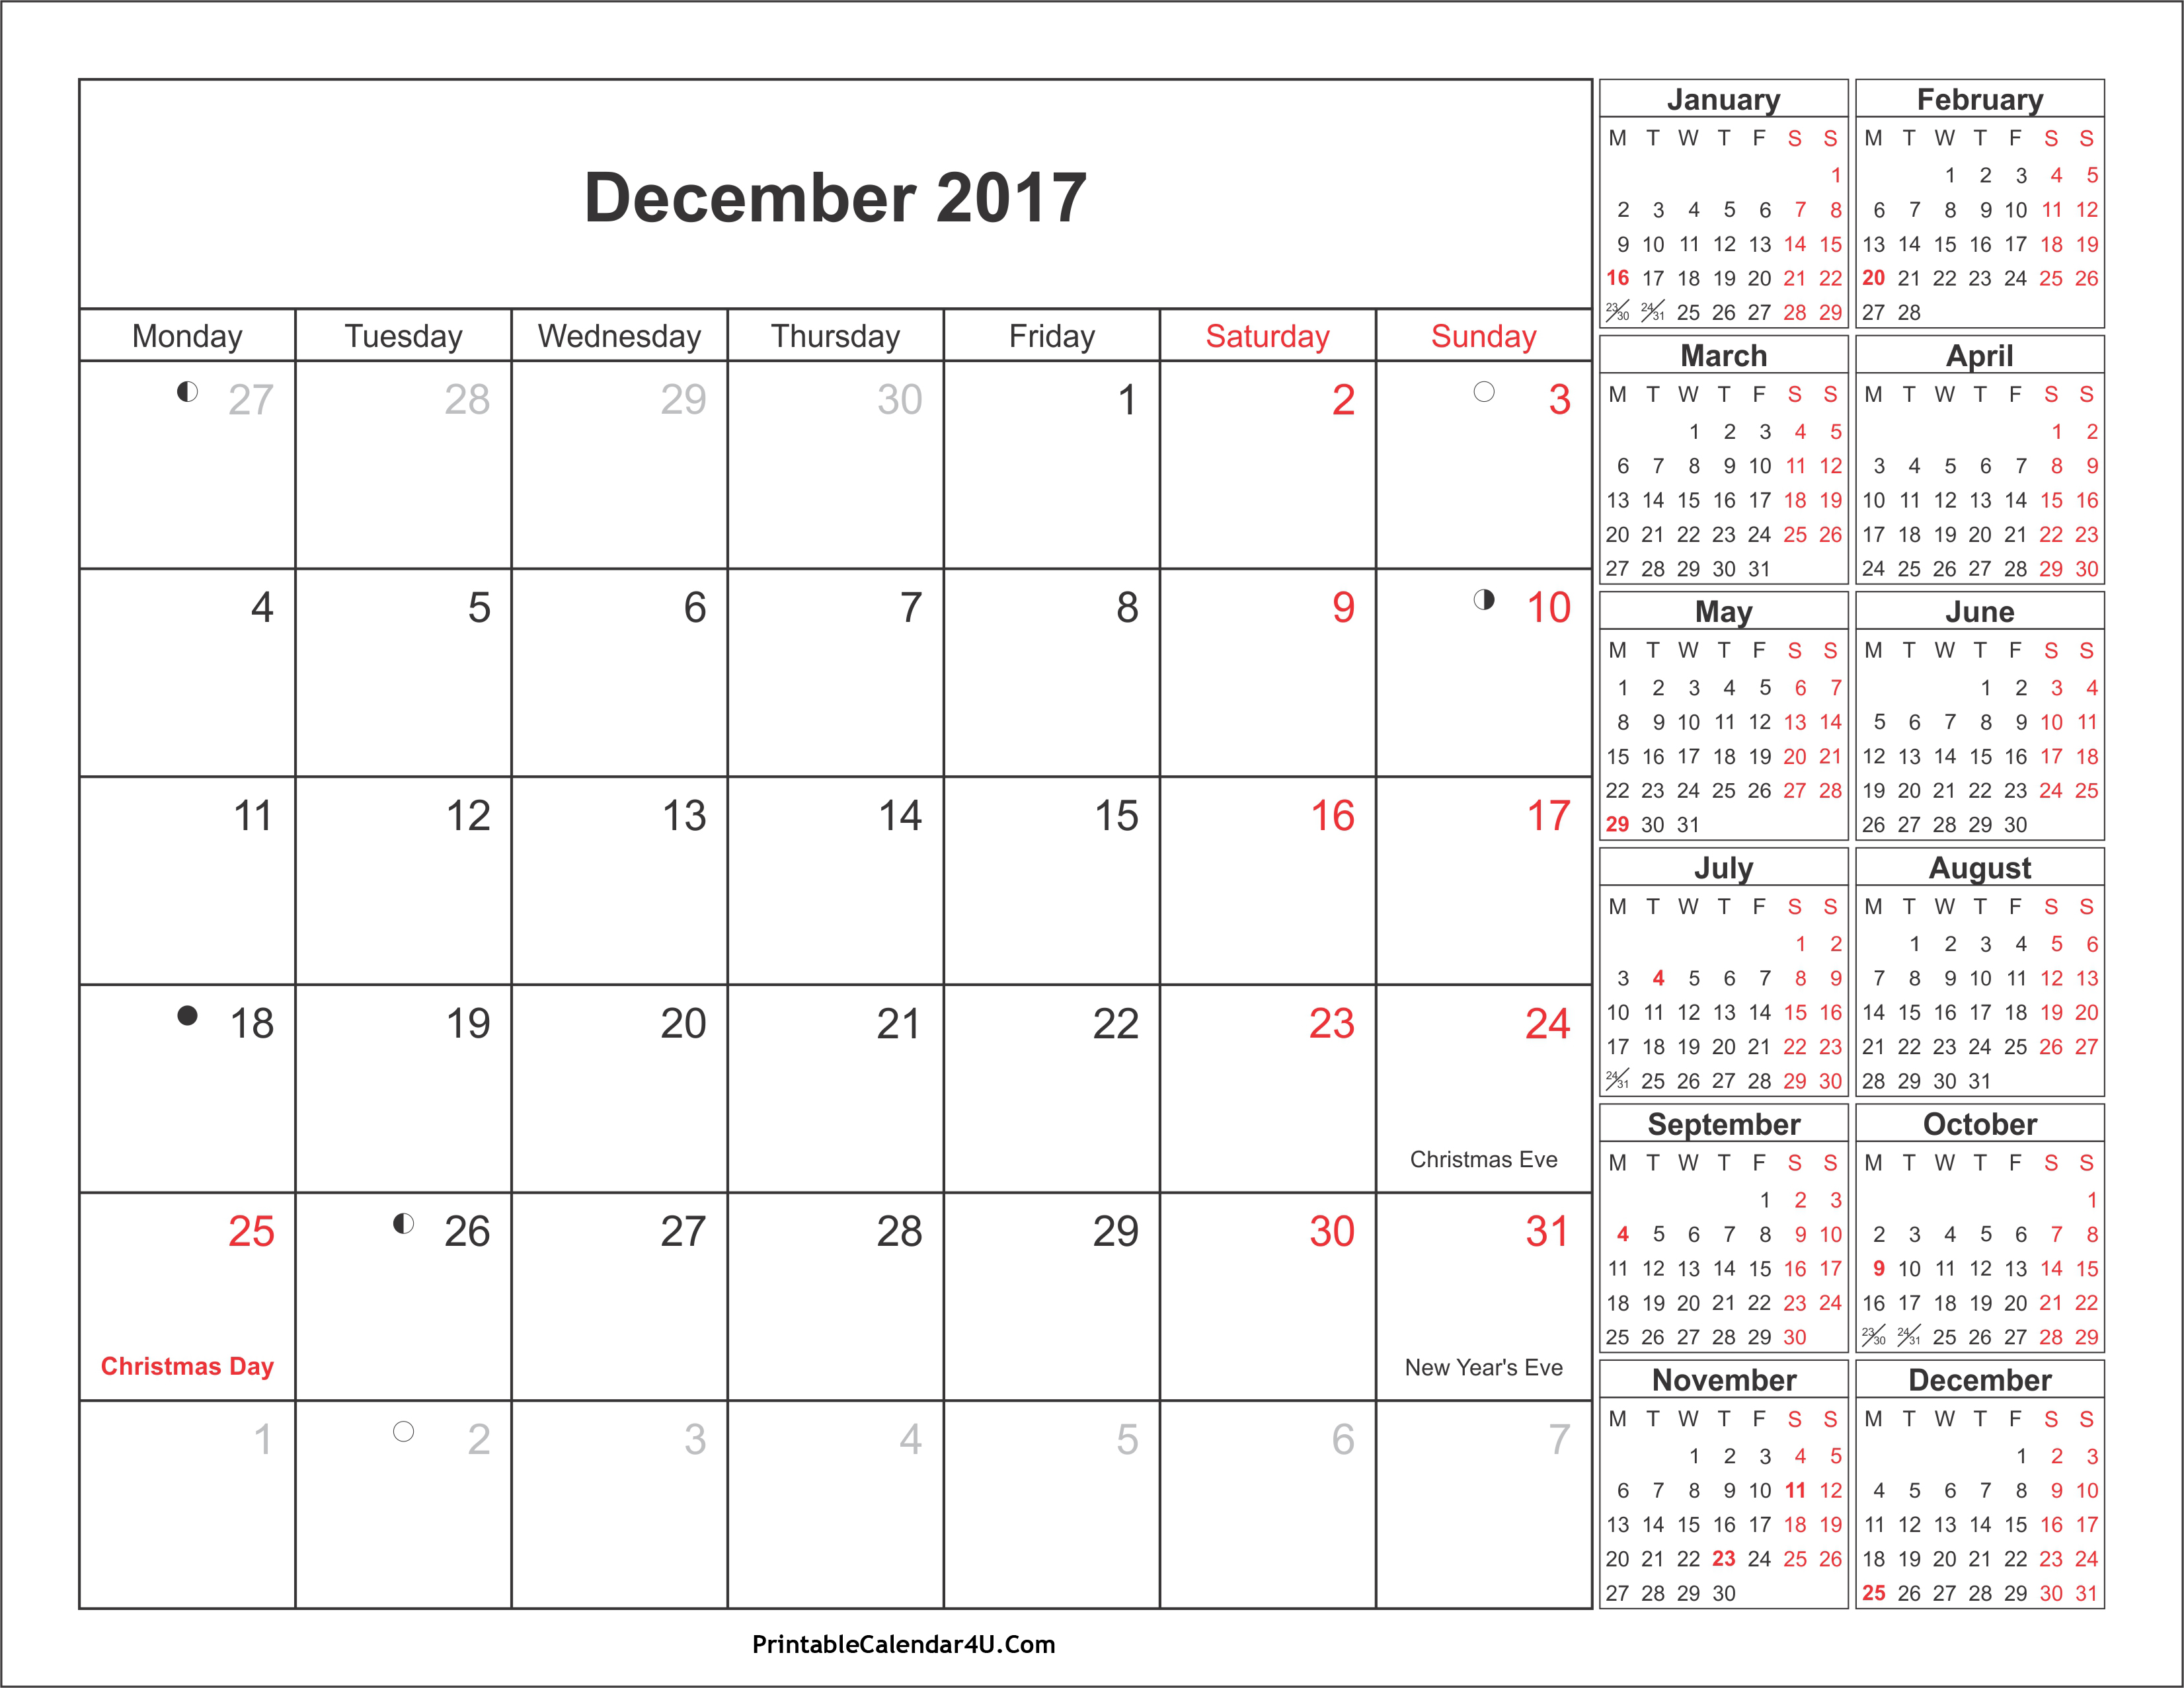 December 2017 calendar printable with holidays (3)